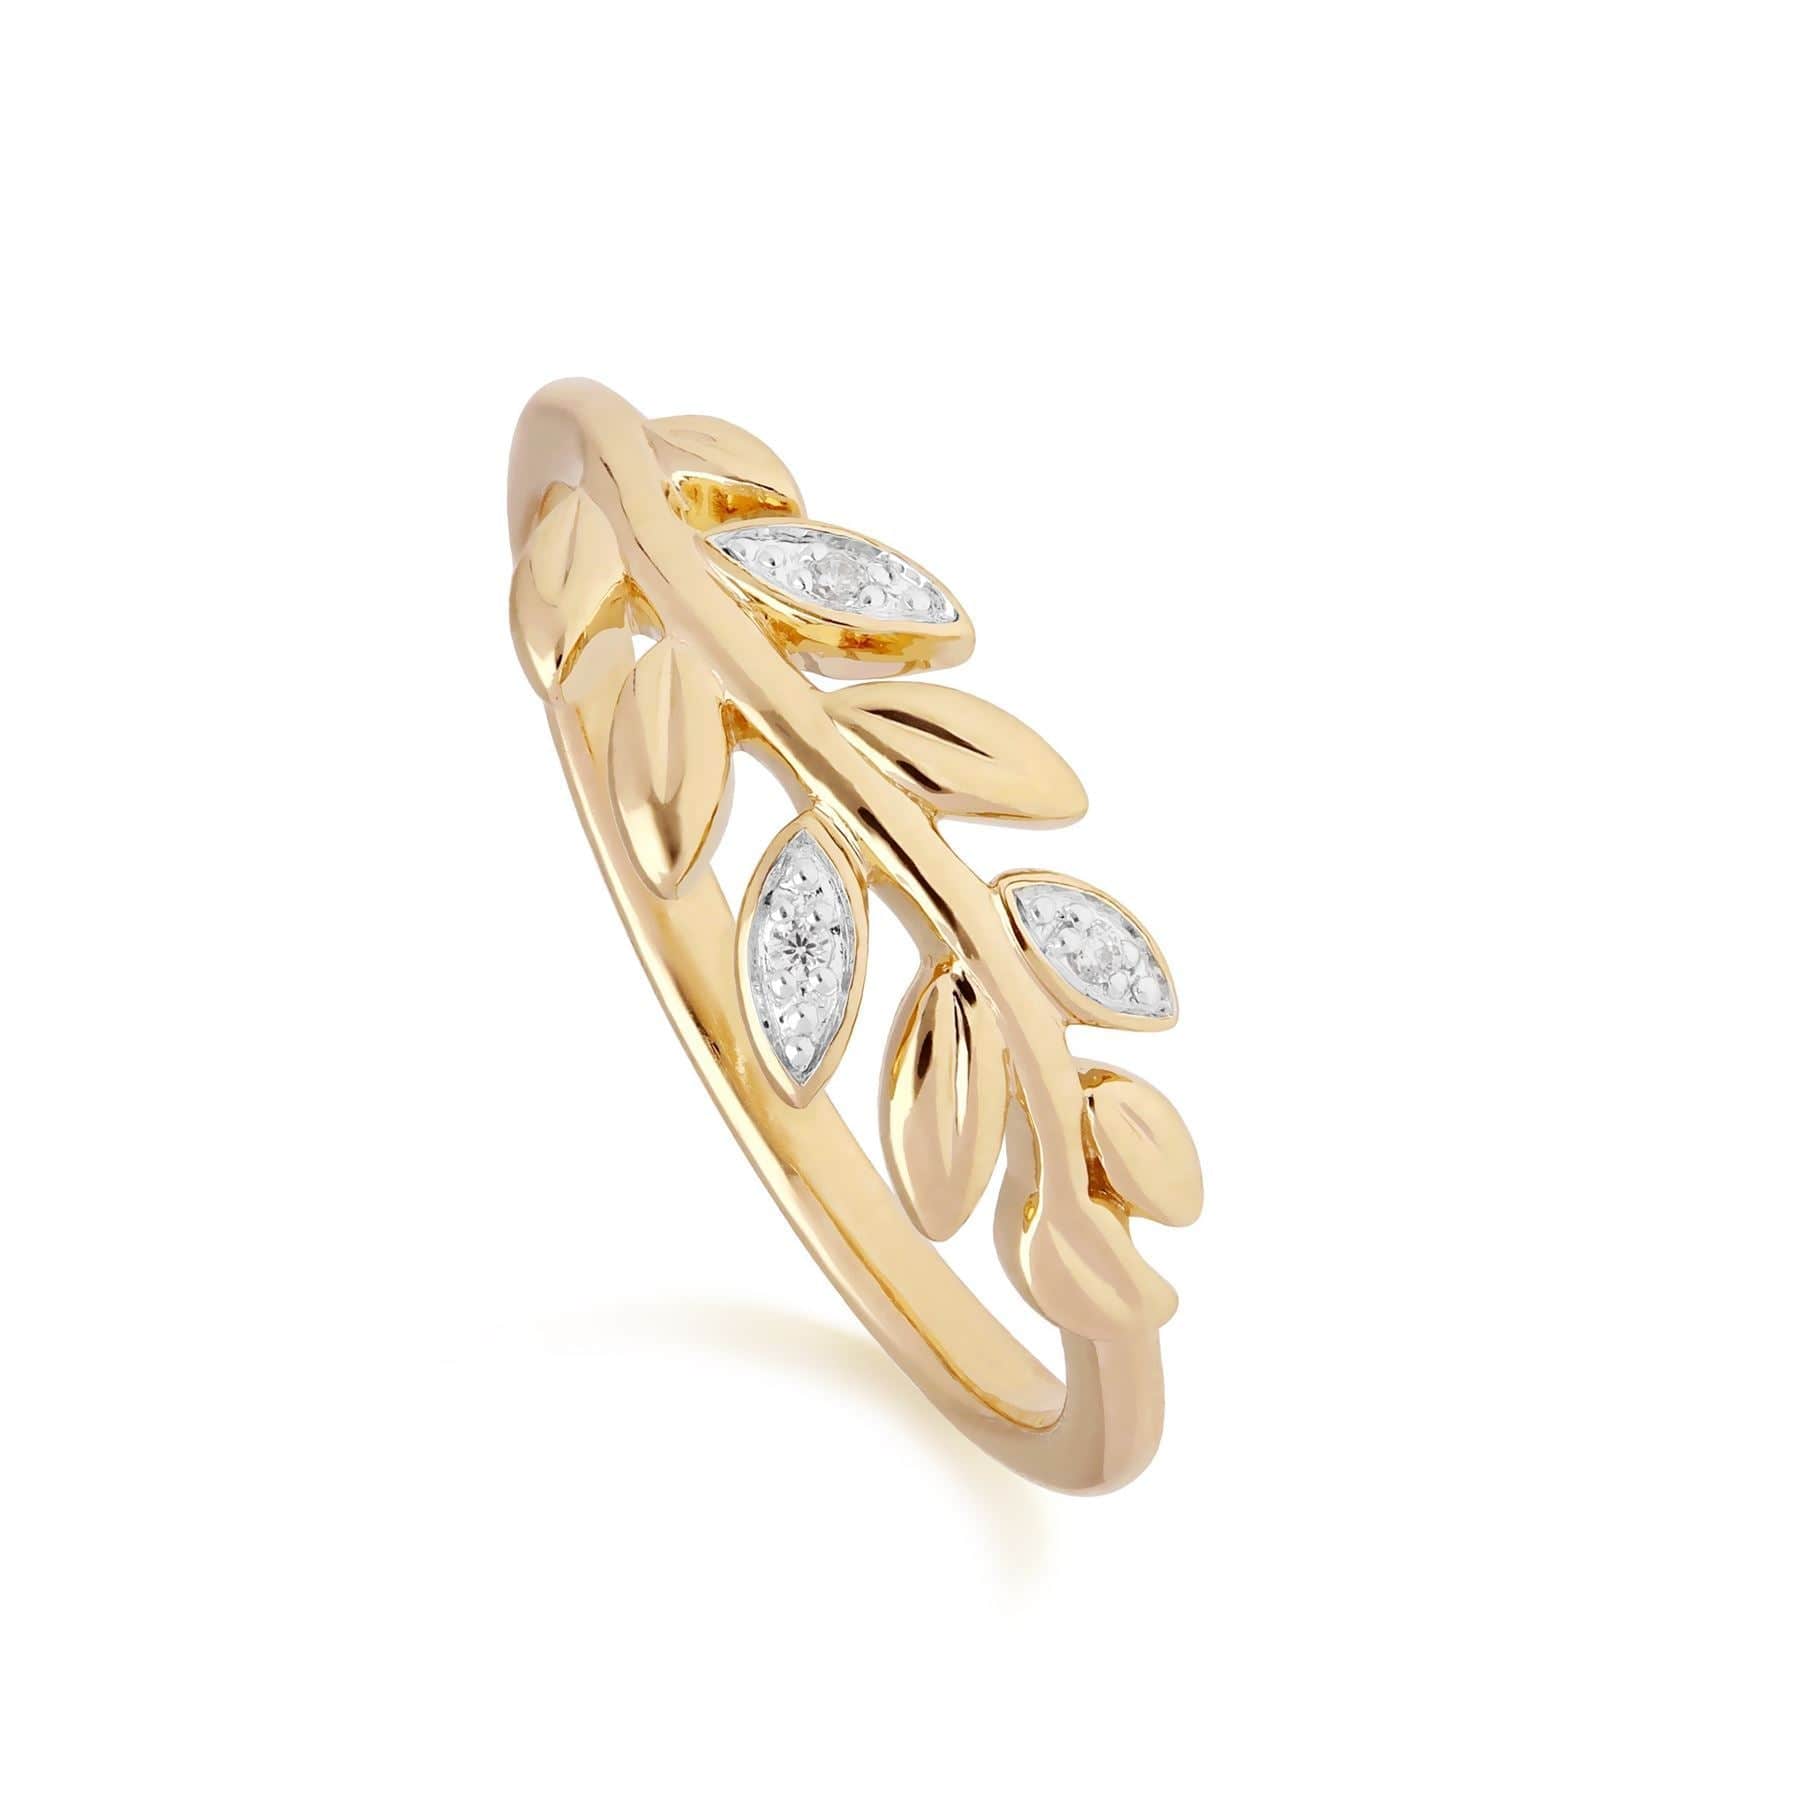 191E0403019-191R0911019 O Leaf Diamond Stud Earring & Ring Set in 9ct Yellow Gold 3